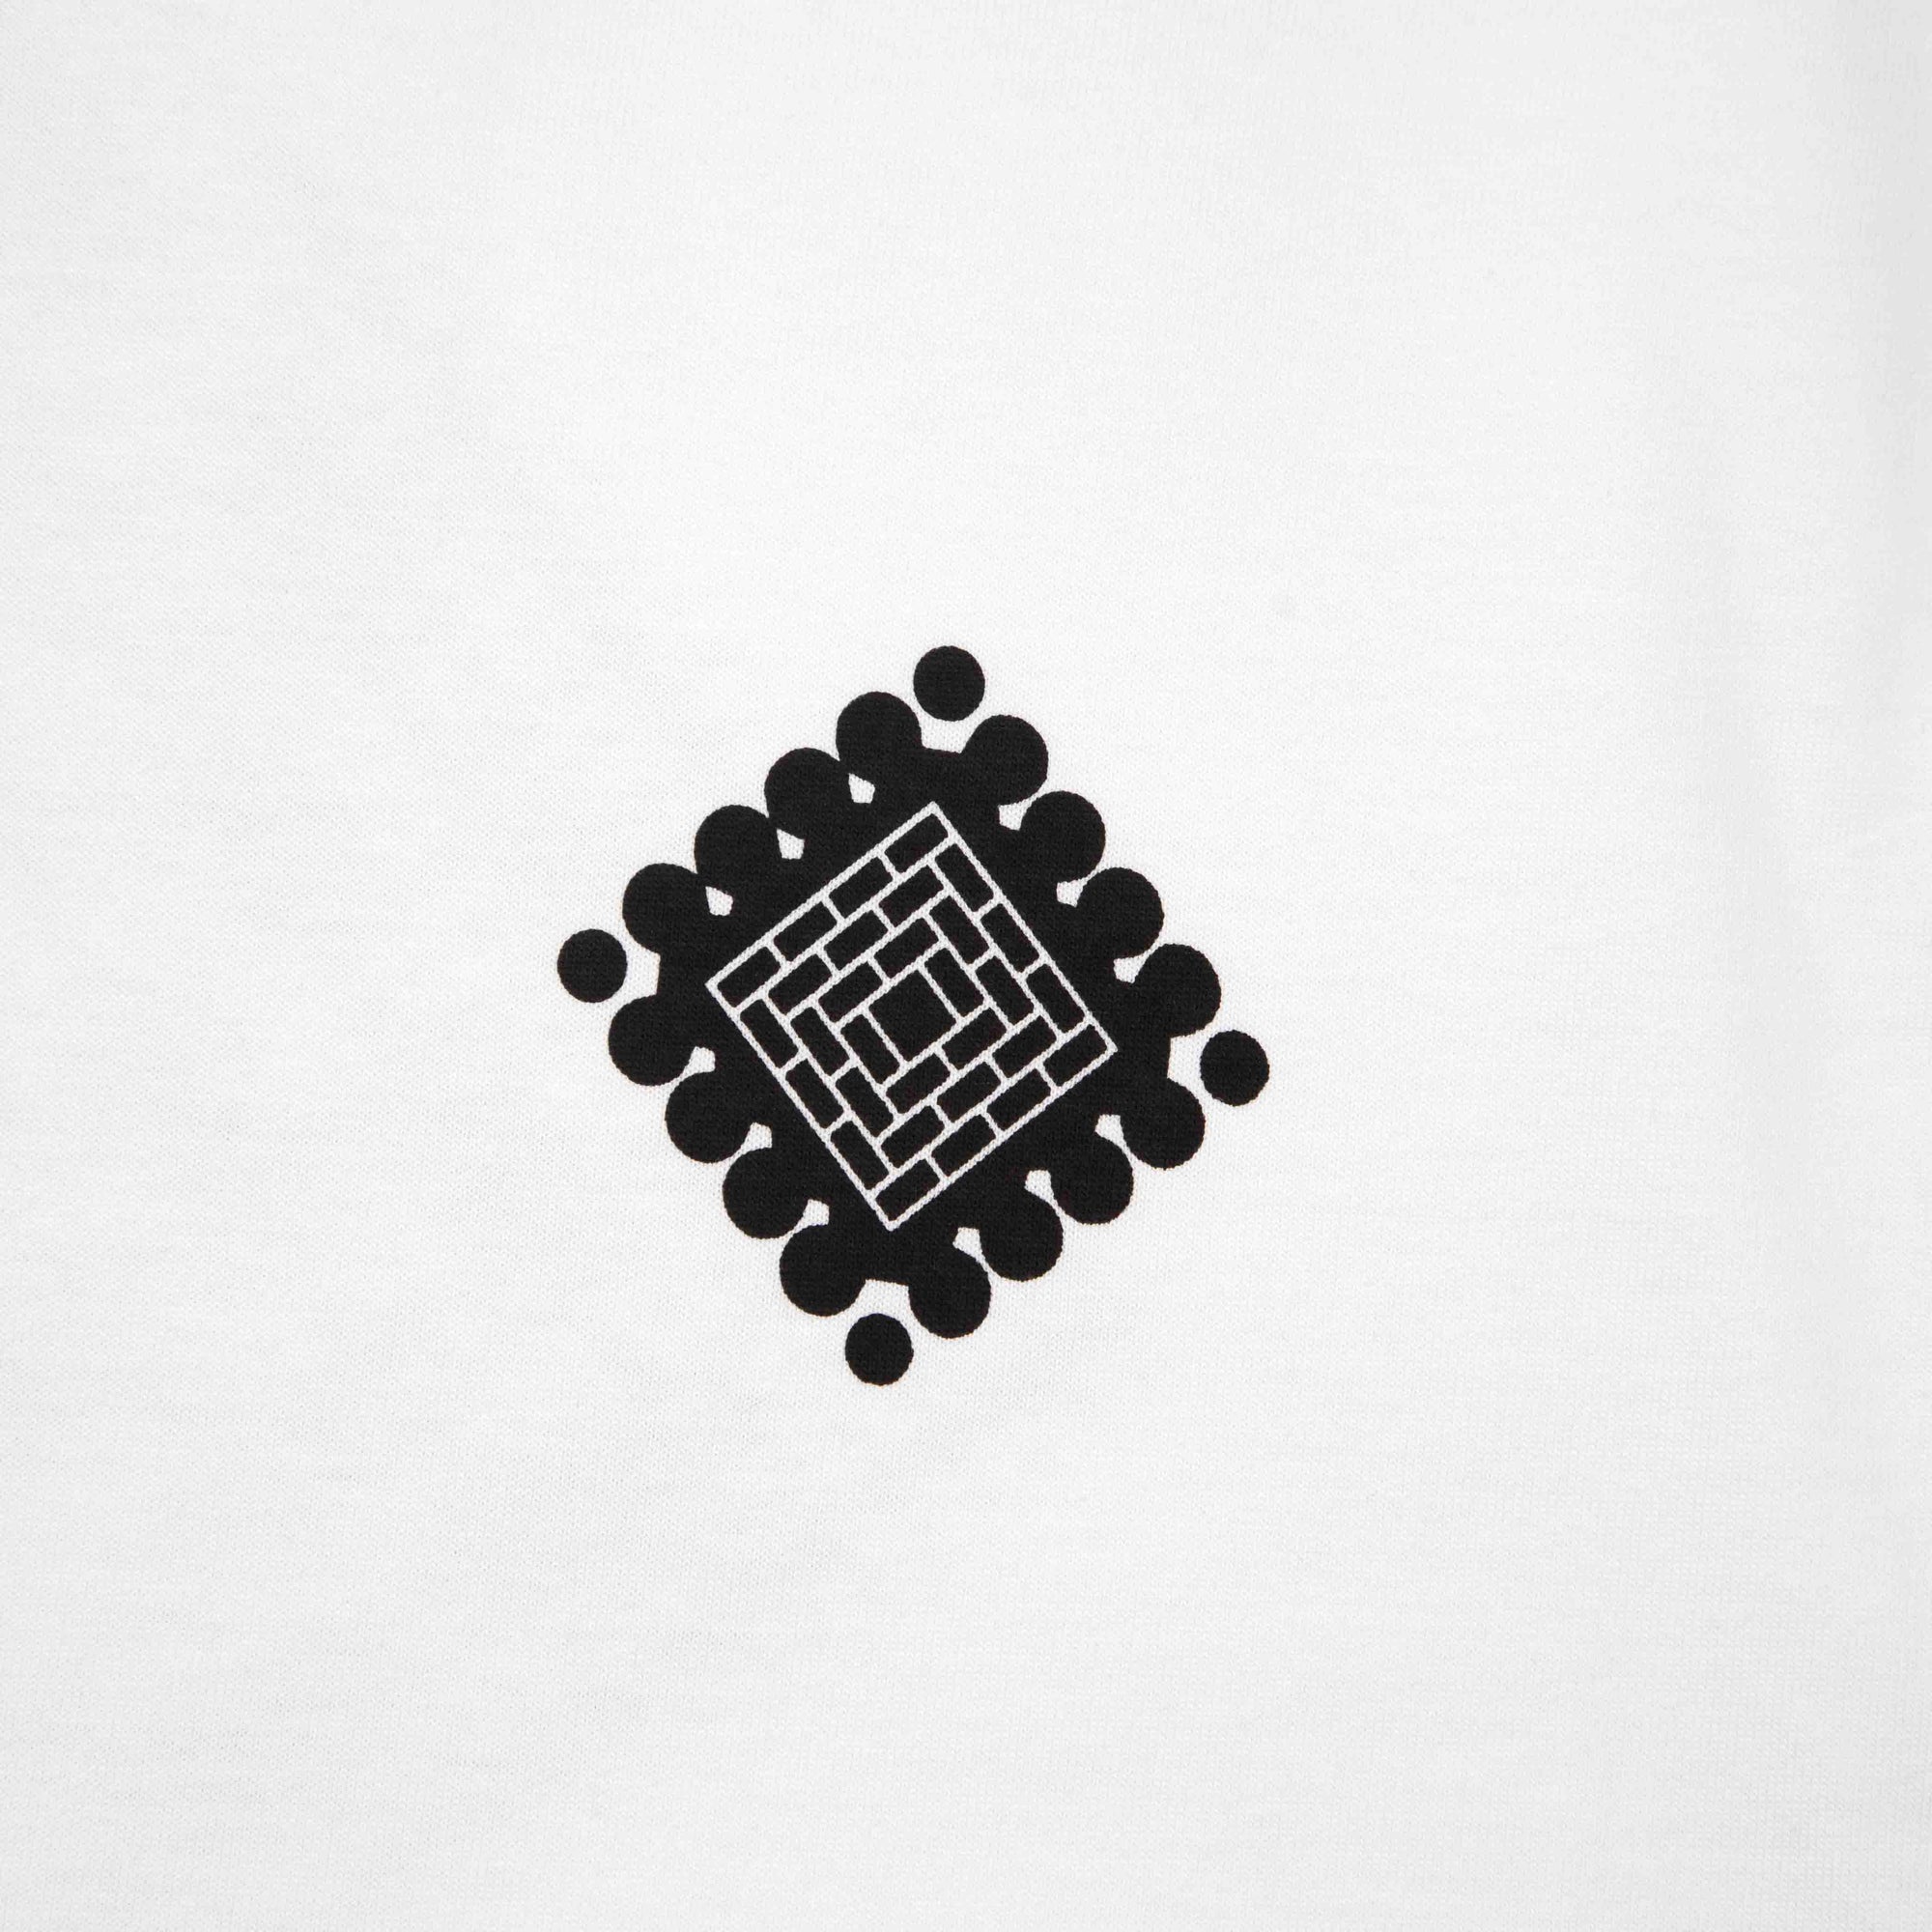 The National Skateboard Co. - Halftone Logo T-Shirt - White